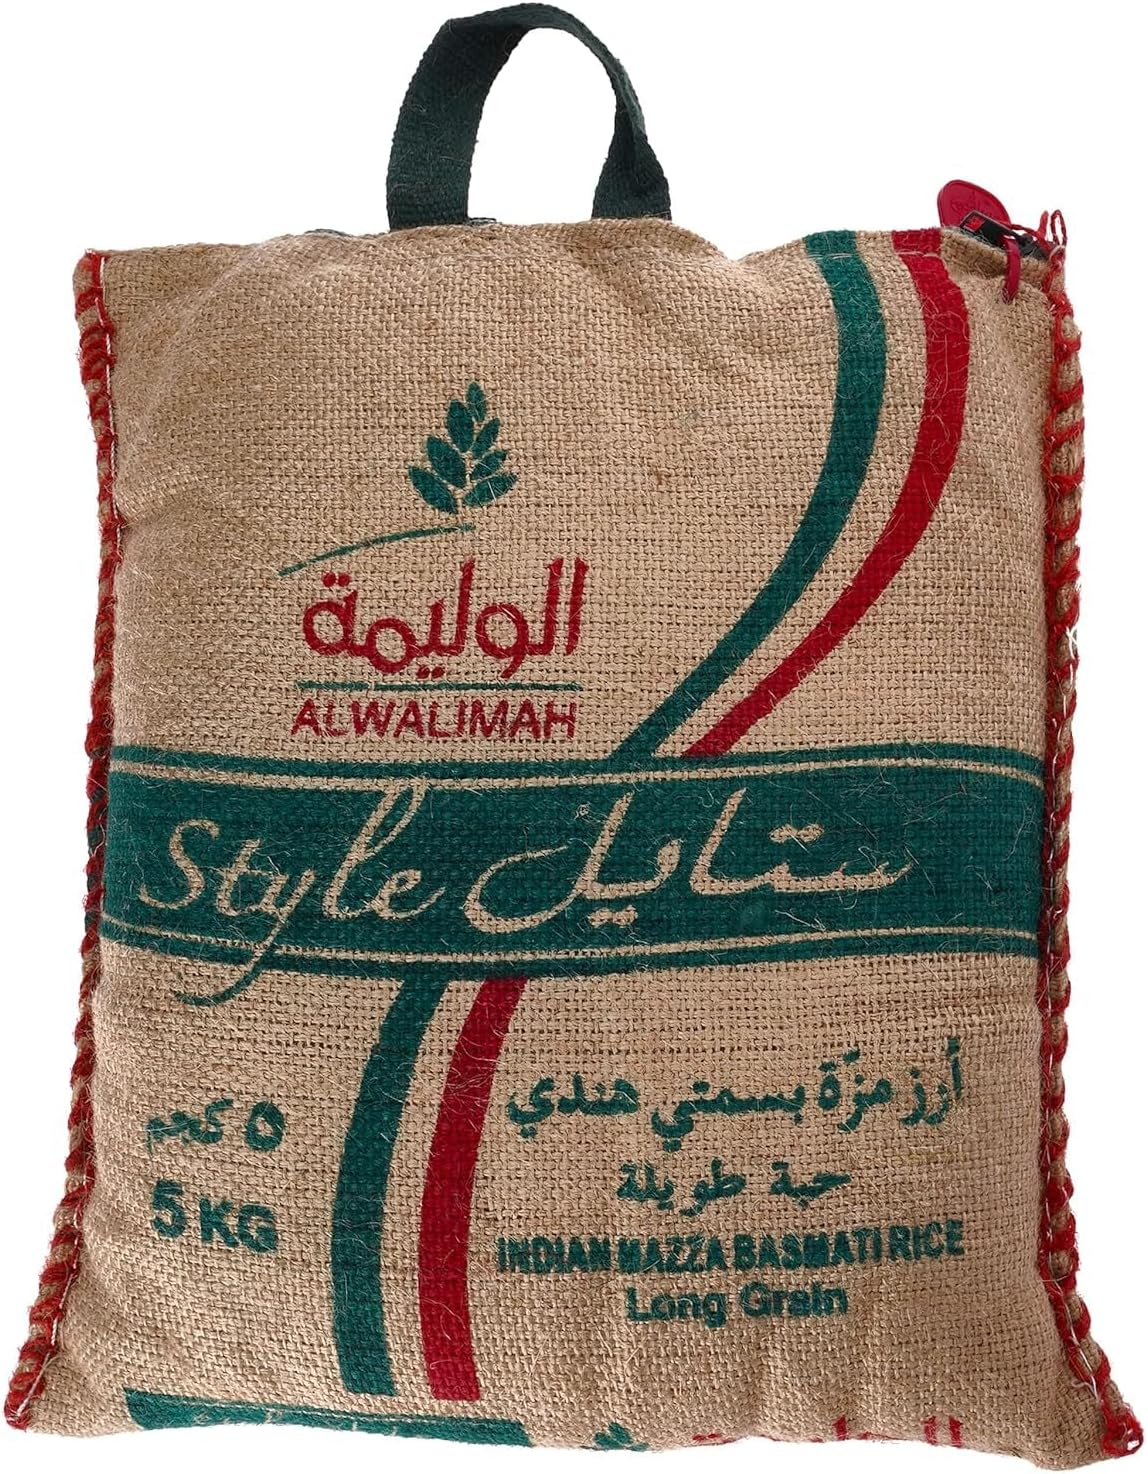 Al Walimah Style Mazza Basmati Rice, 5Kg, Pack of 1